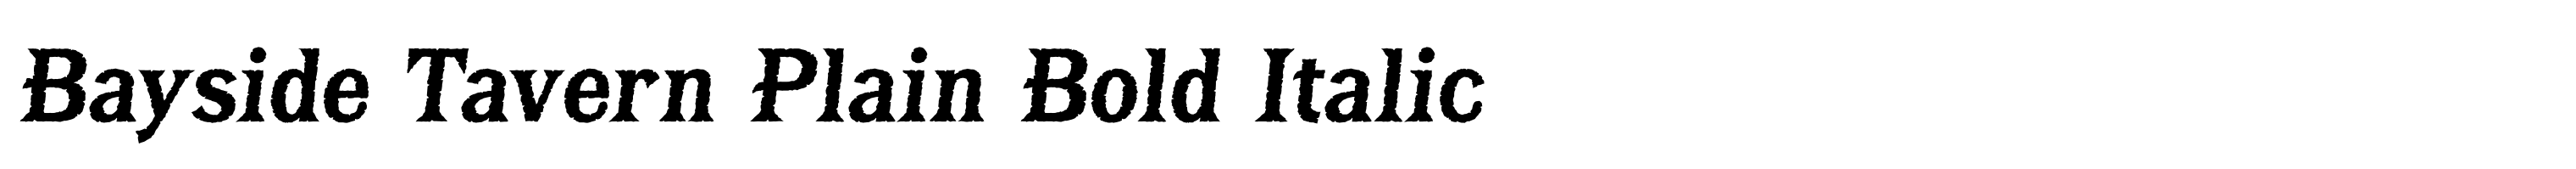 Bayside Tavern Plain Bold Italic